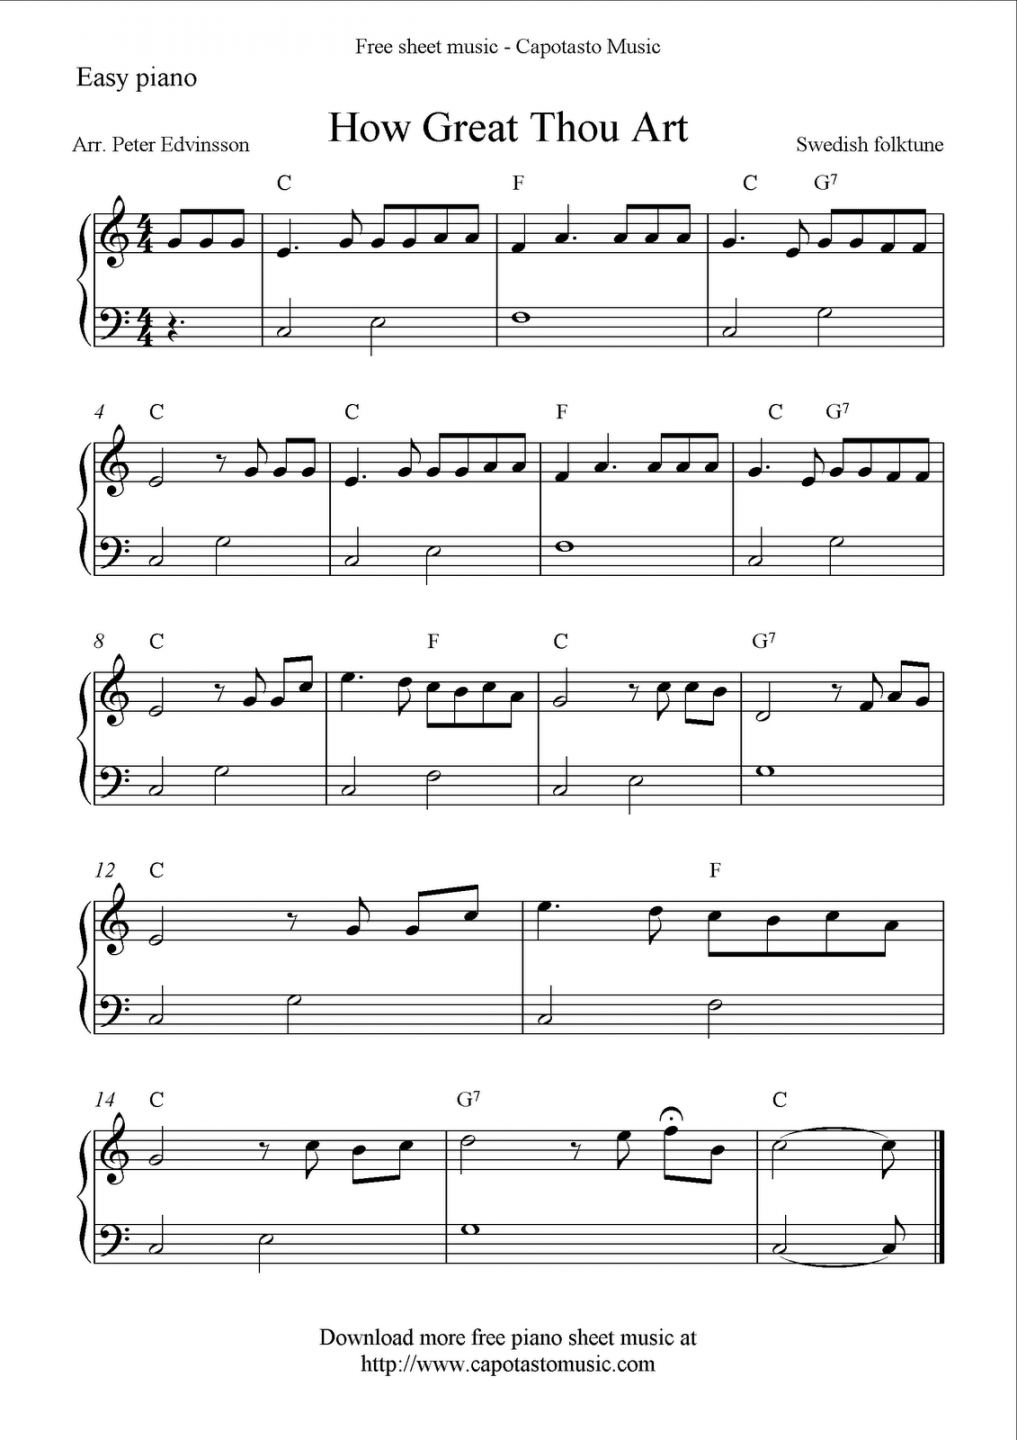 Printable Sheet Music Free - Printable - Free easy piano sheet music, How Great Thou Art  Piano sheet